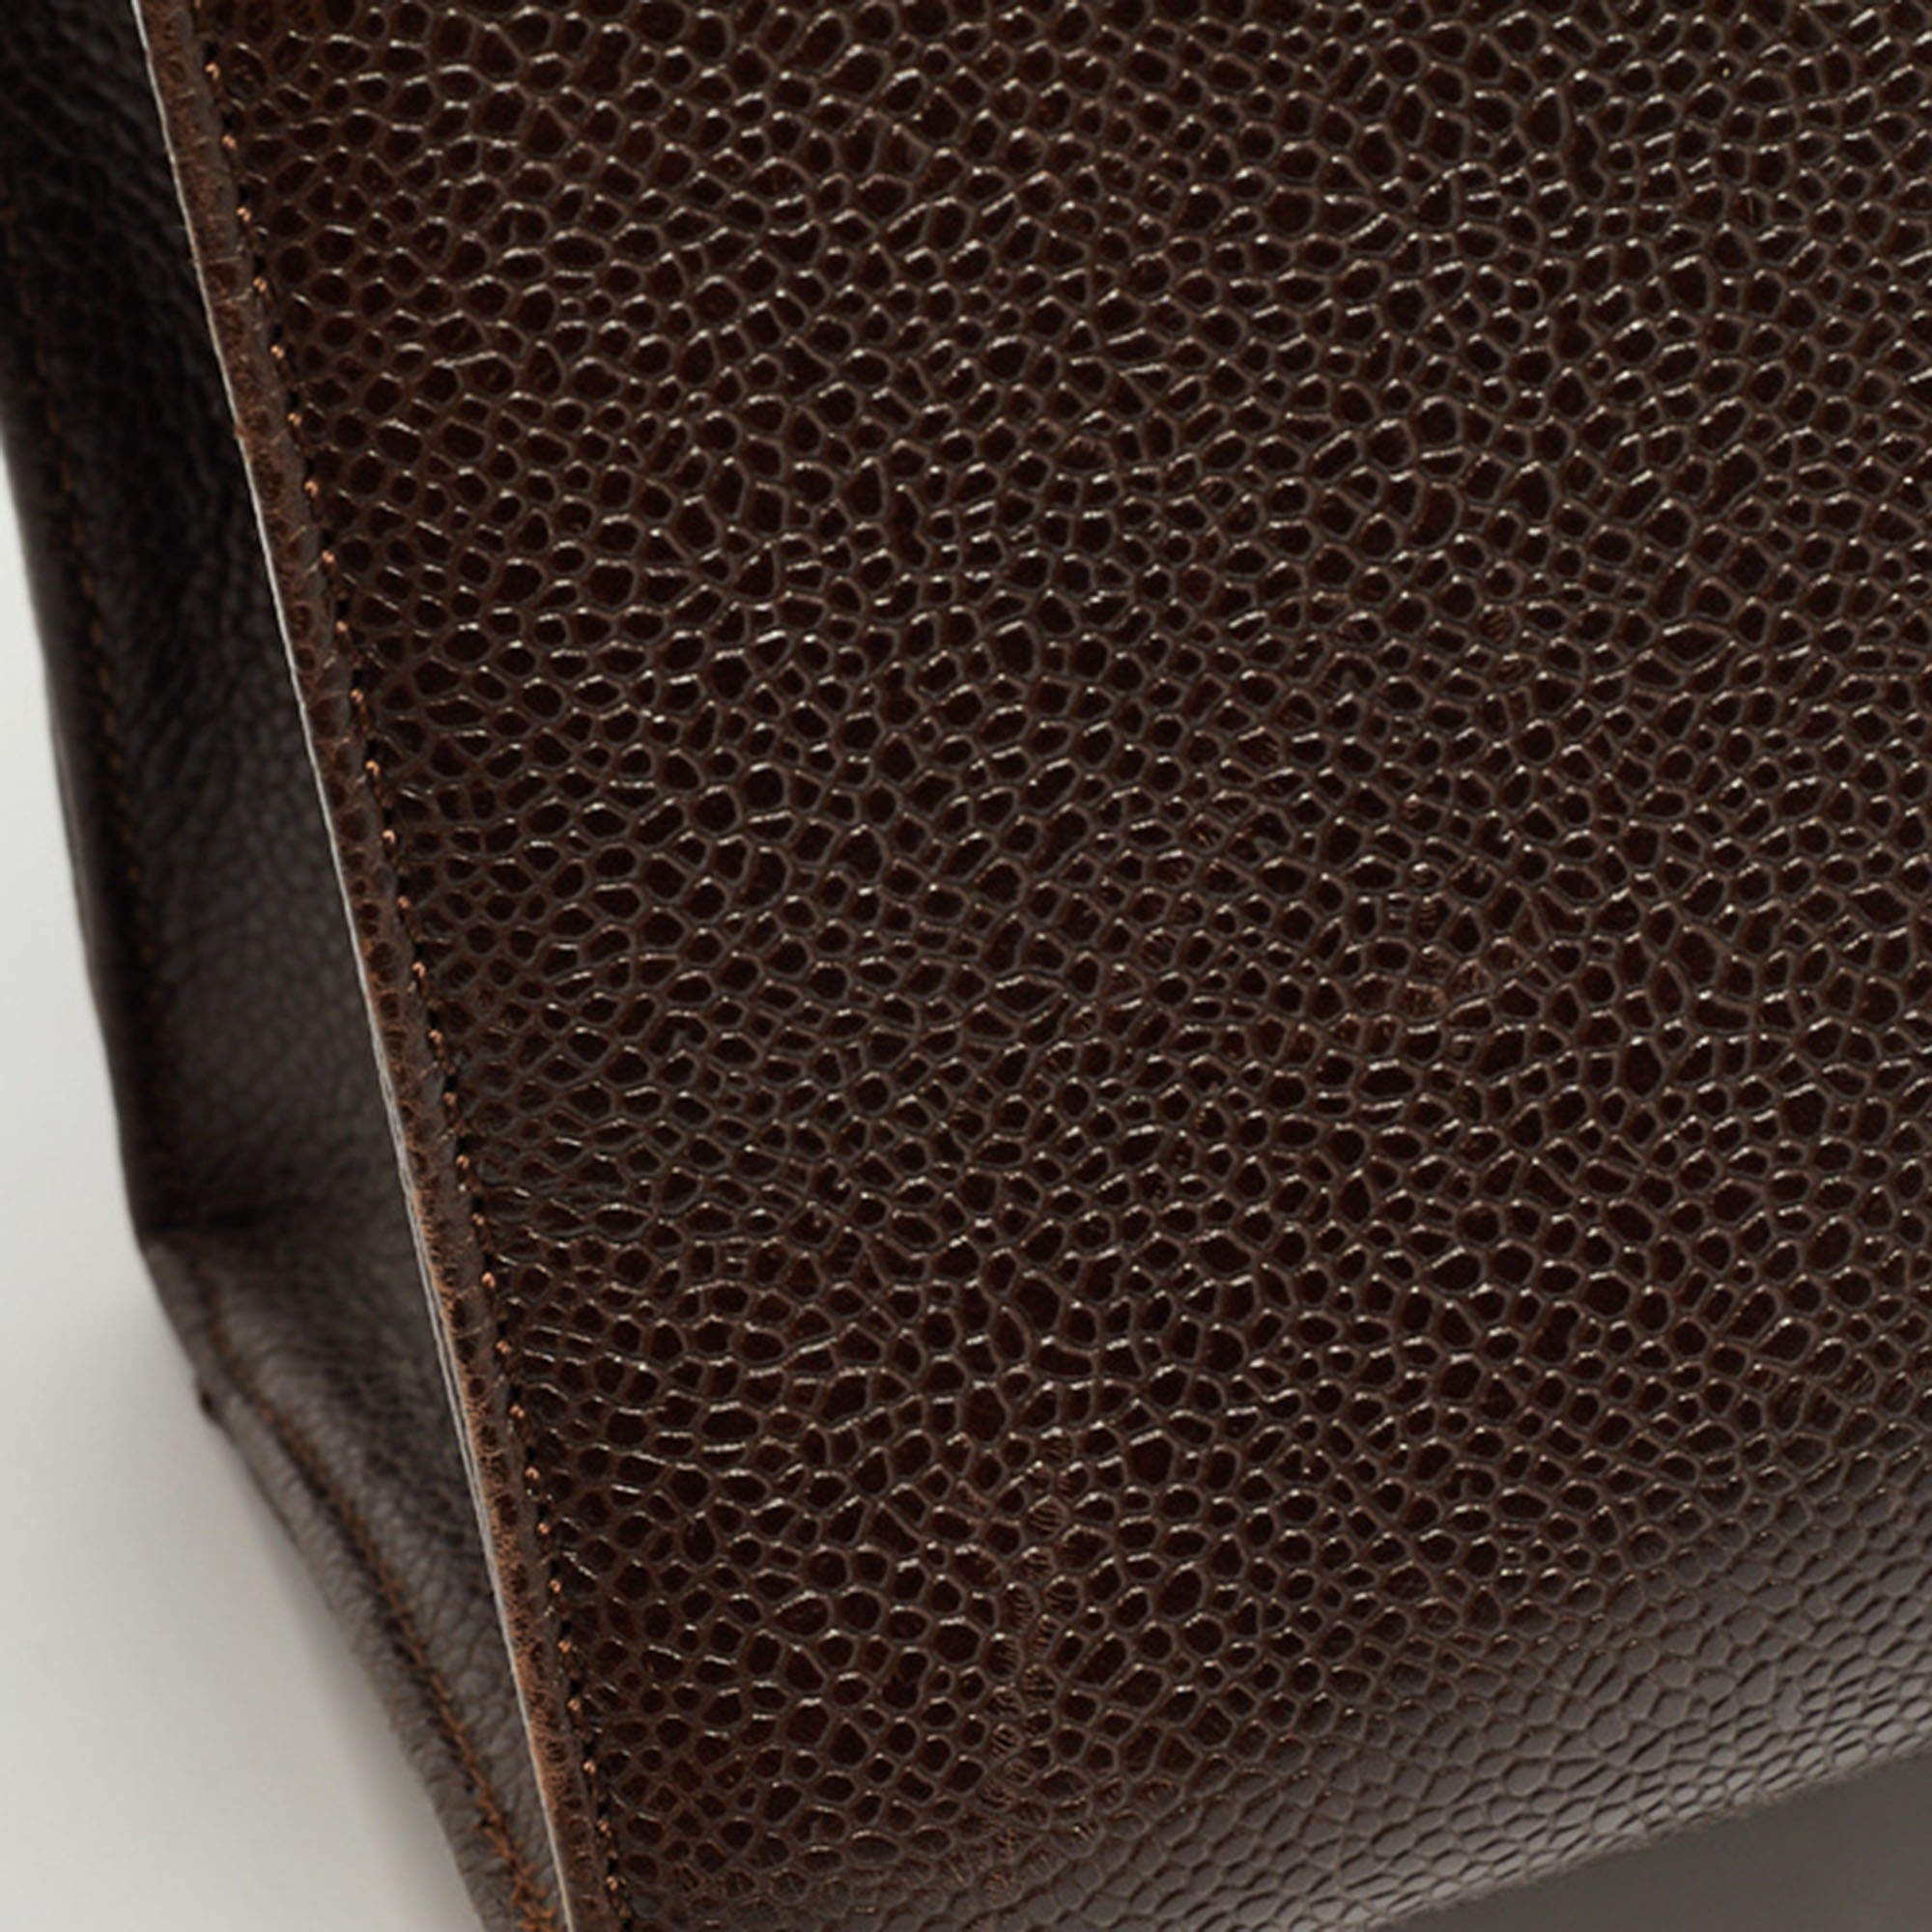 RDC12869 Authentic Chanel Brown Caviar Leather CC Turnlock Tote Bag w/Strap